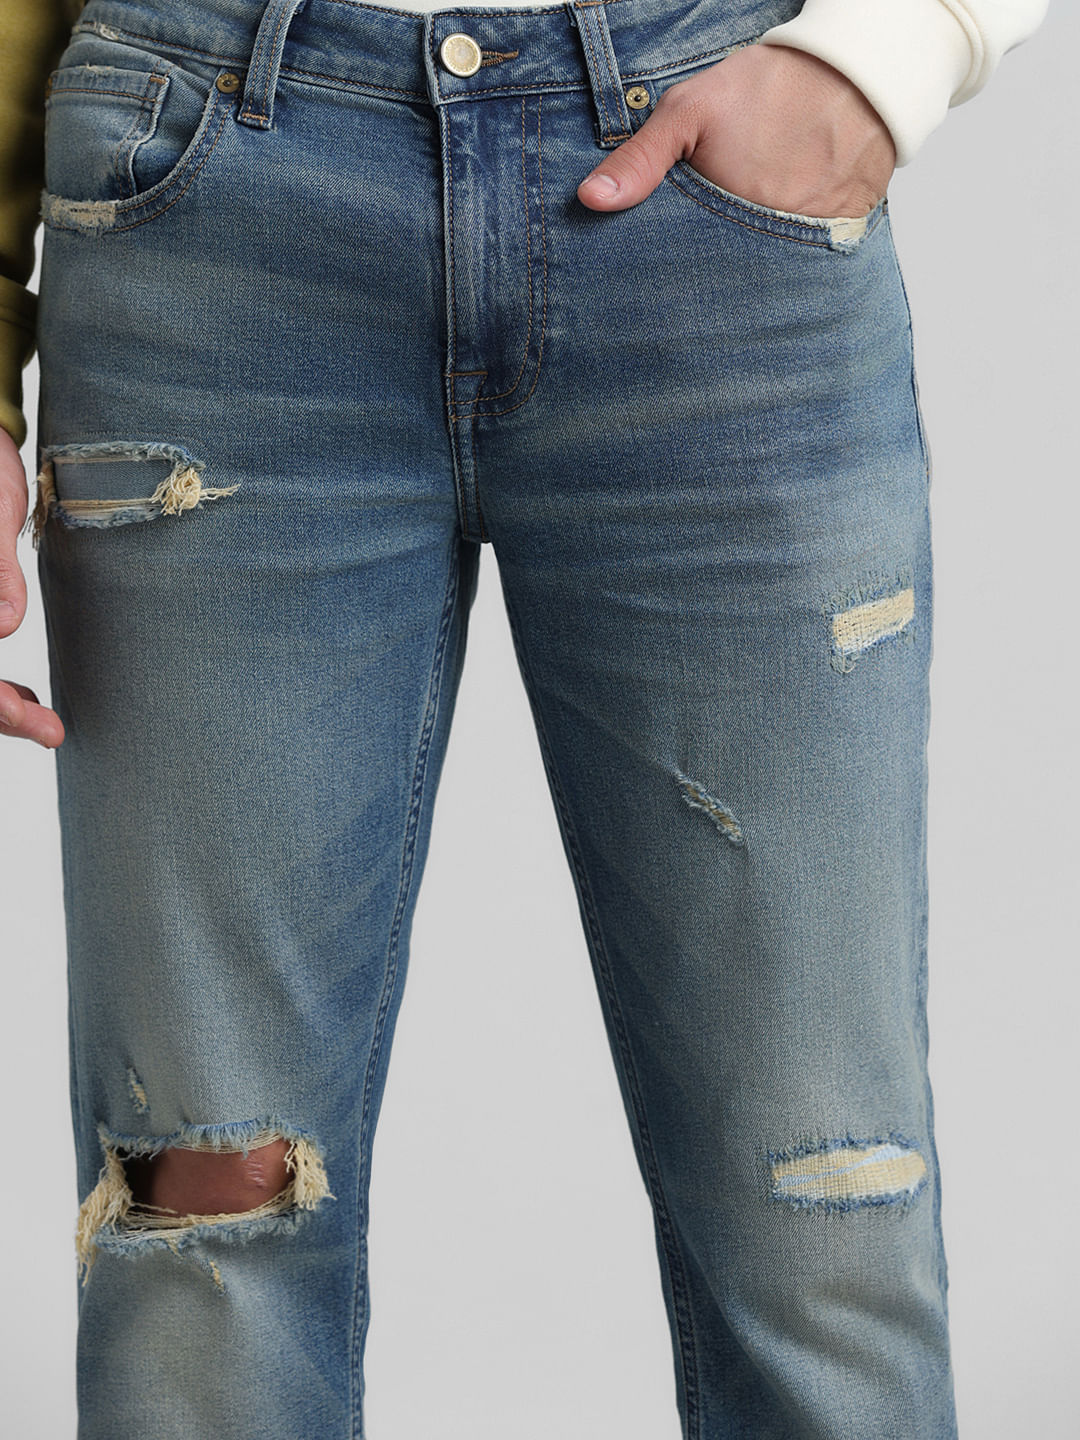 Buy Blue Jeans & Jeggings for Women by Crimsoune club Online | Ajio.com